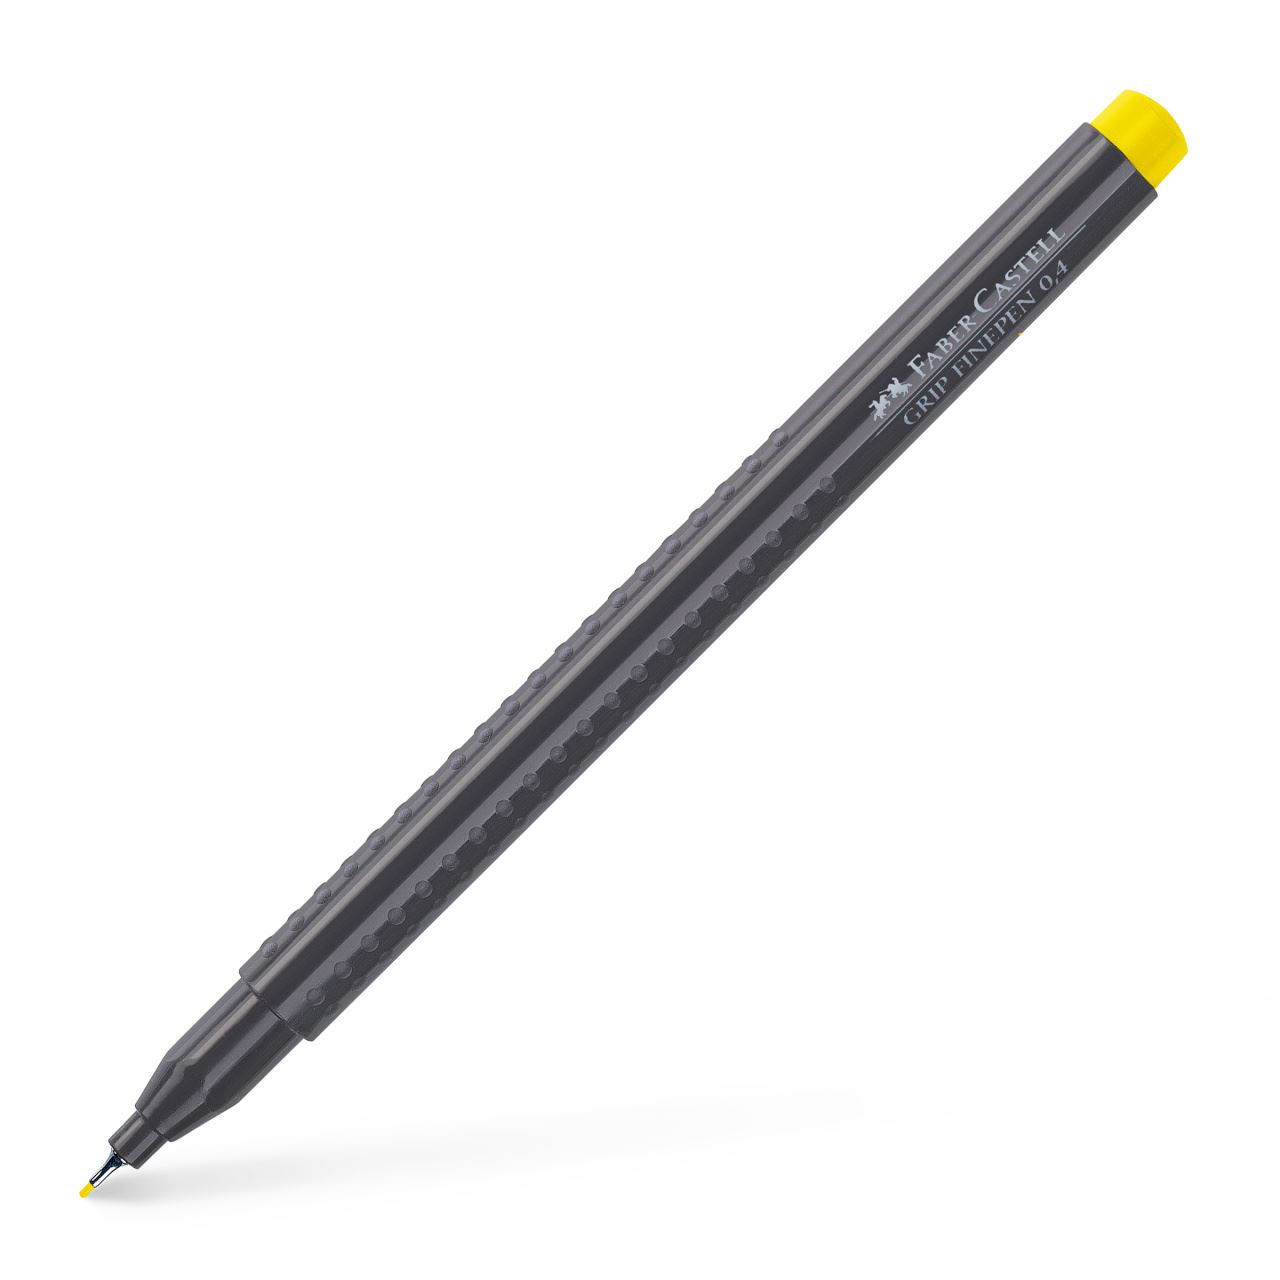 Faber-Castell - Grip Finepen, 0.4, light chrome yellow